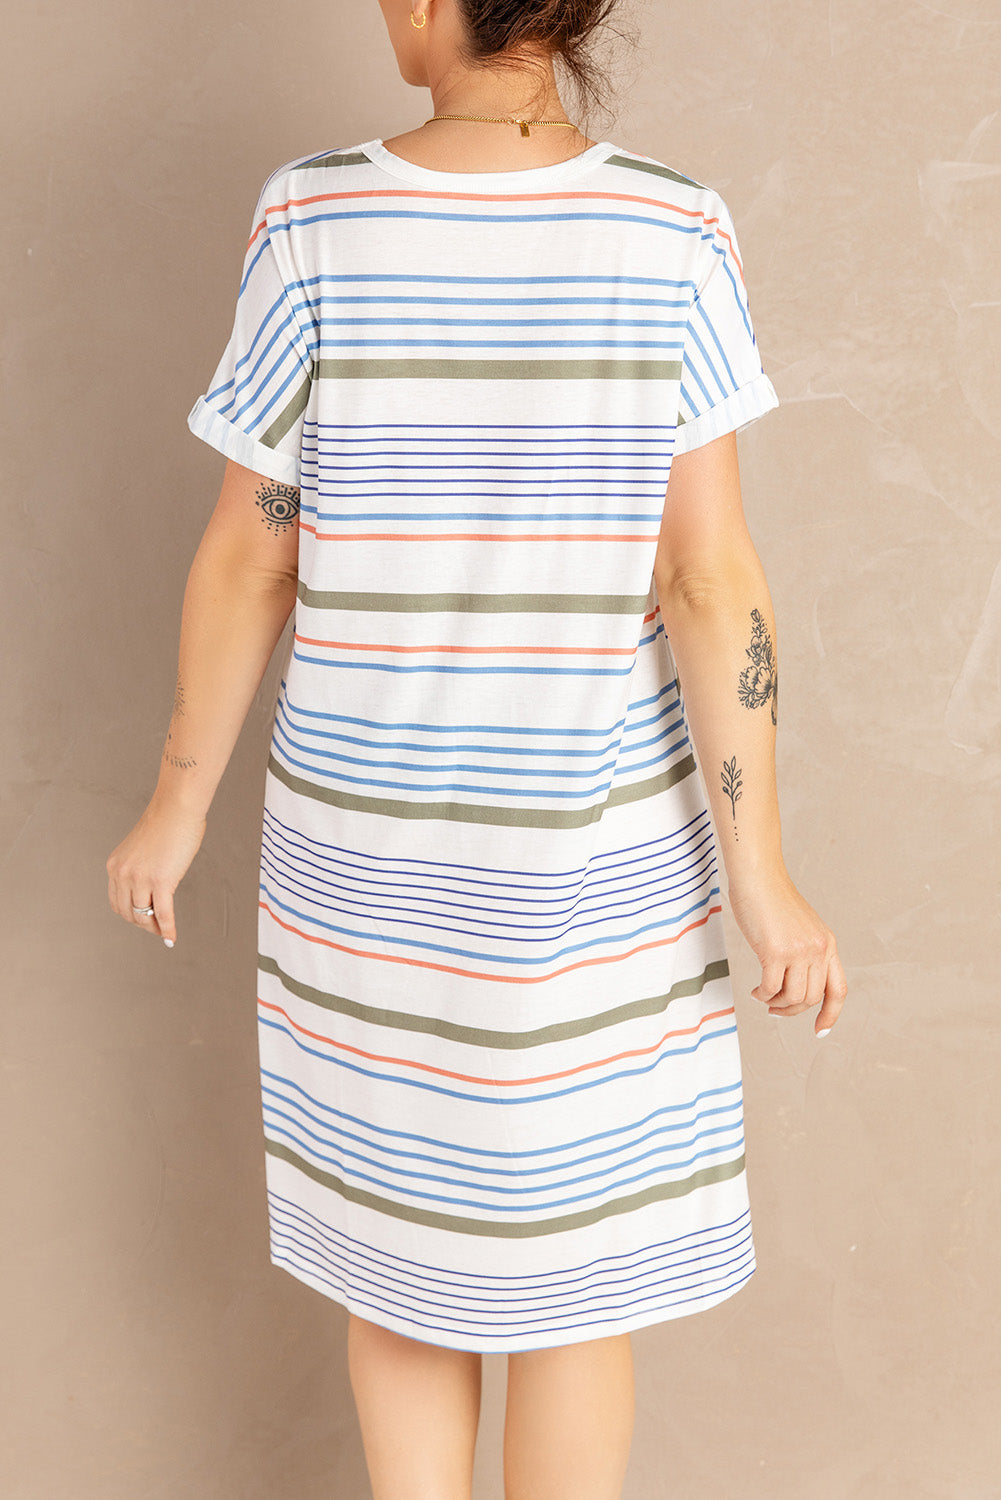 Casual Short-Sleeved Striped T-shirt Mini Dress